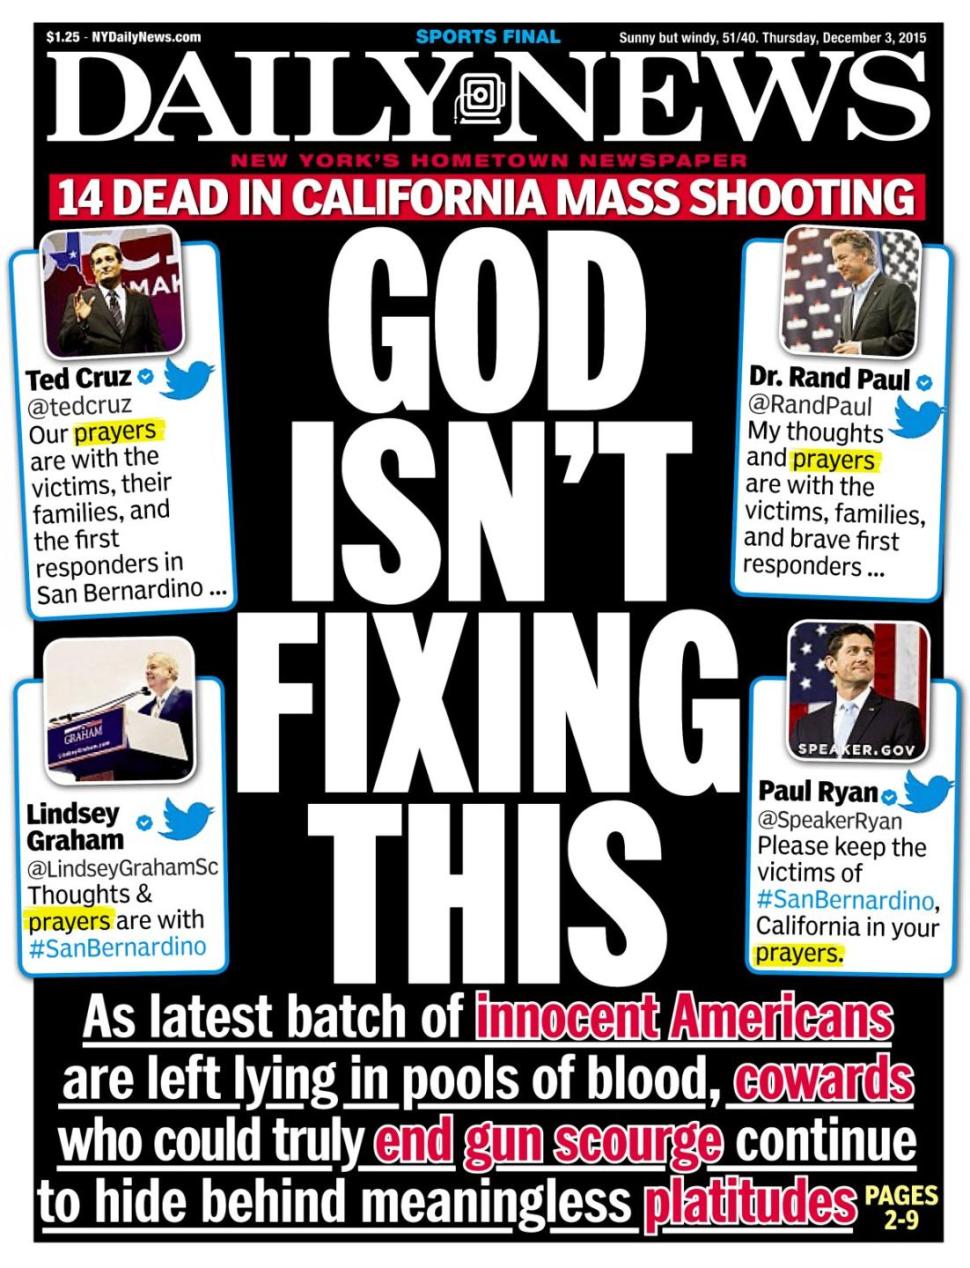 nydailynews.com GOP nra mass shooting prayer bs